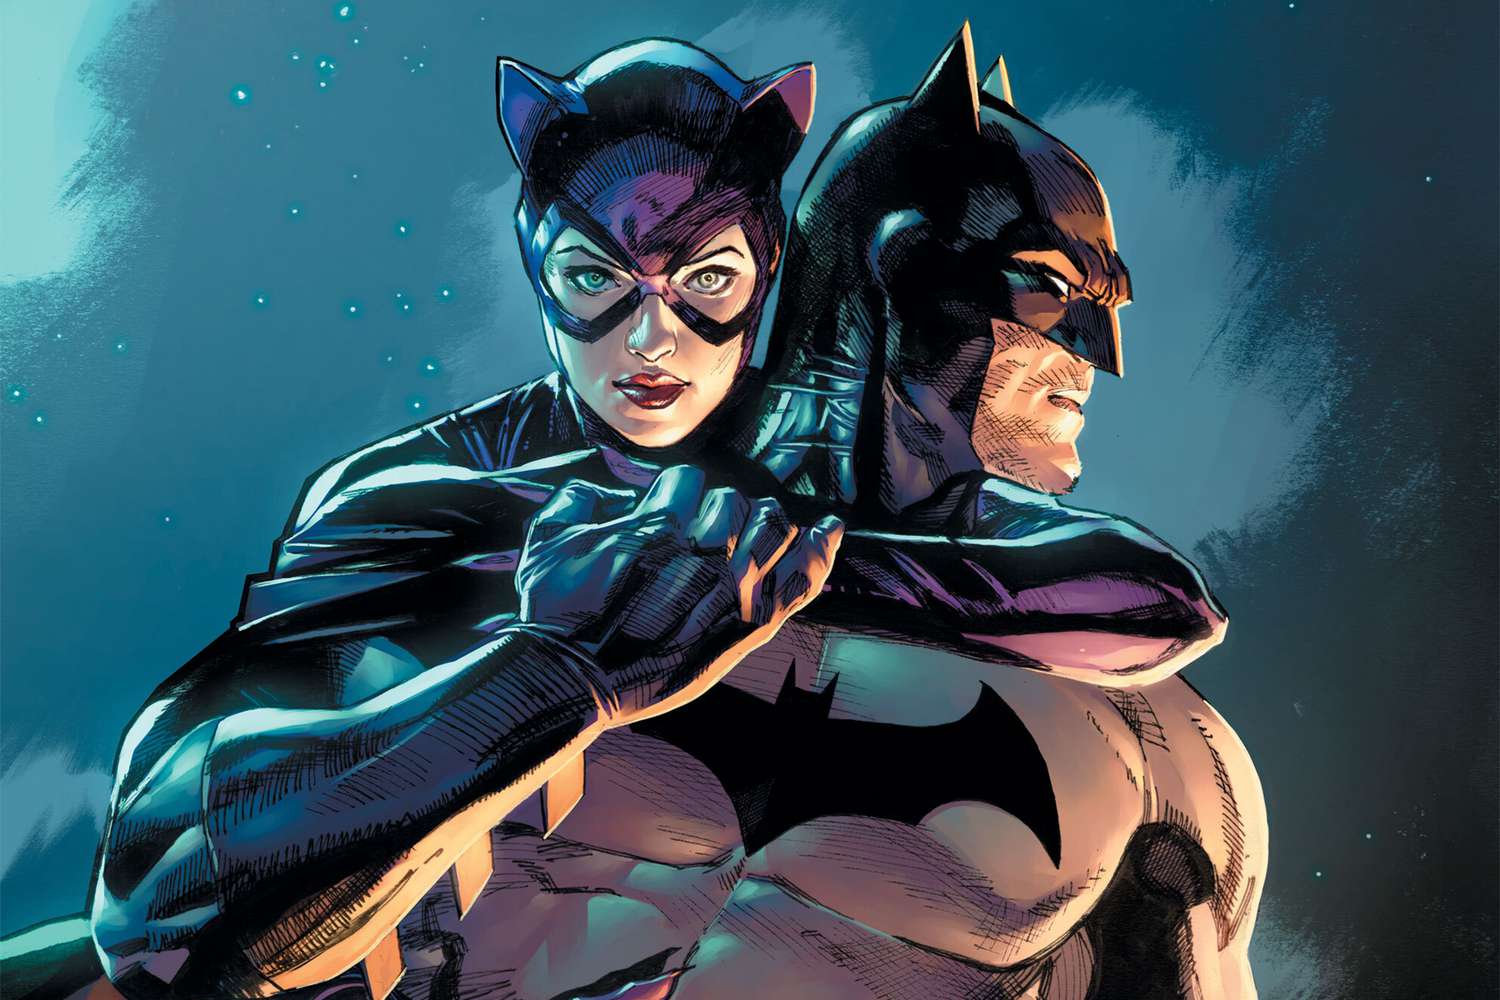 Tom King's Batman/Catwoman